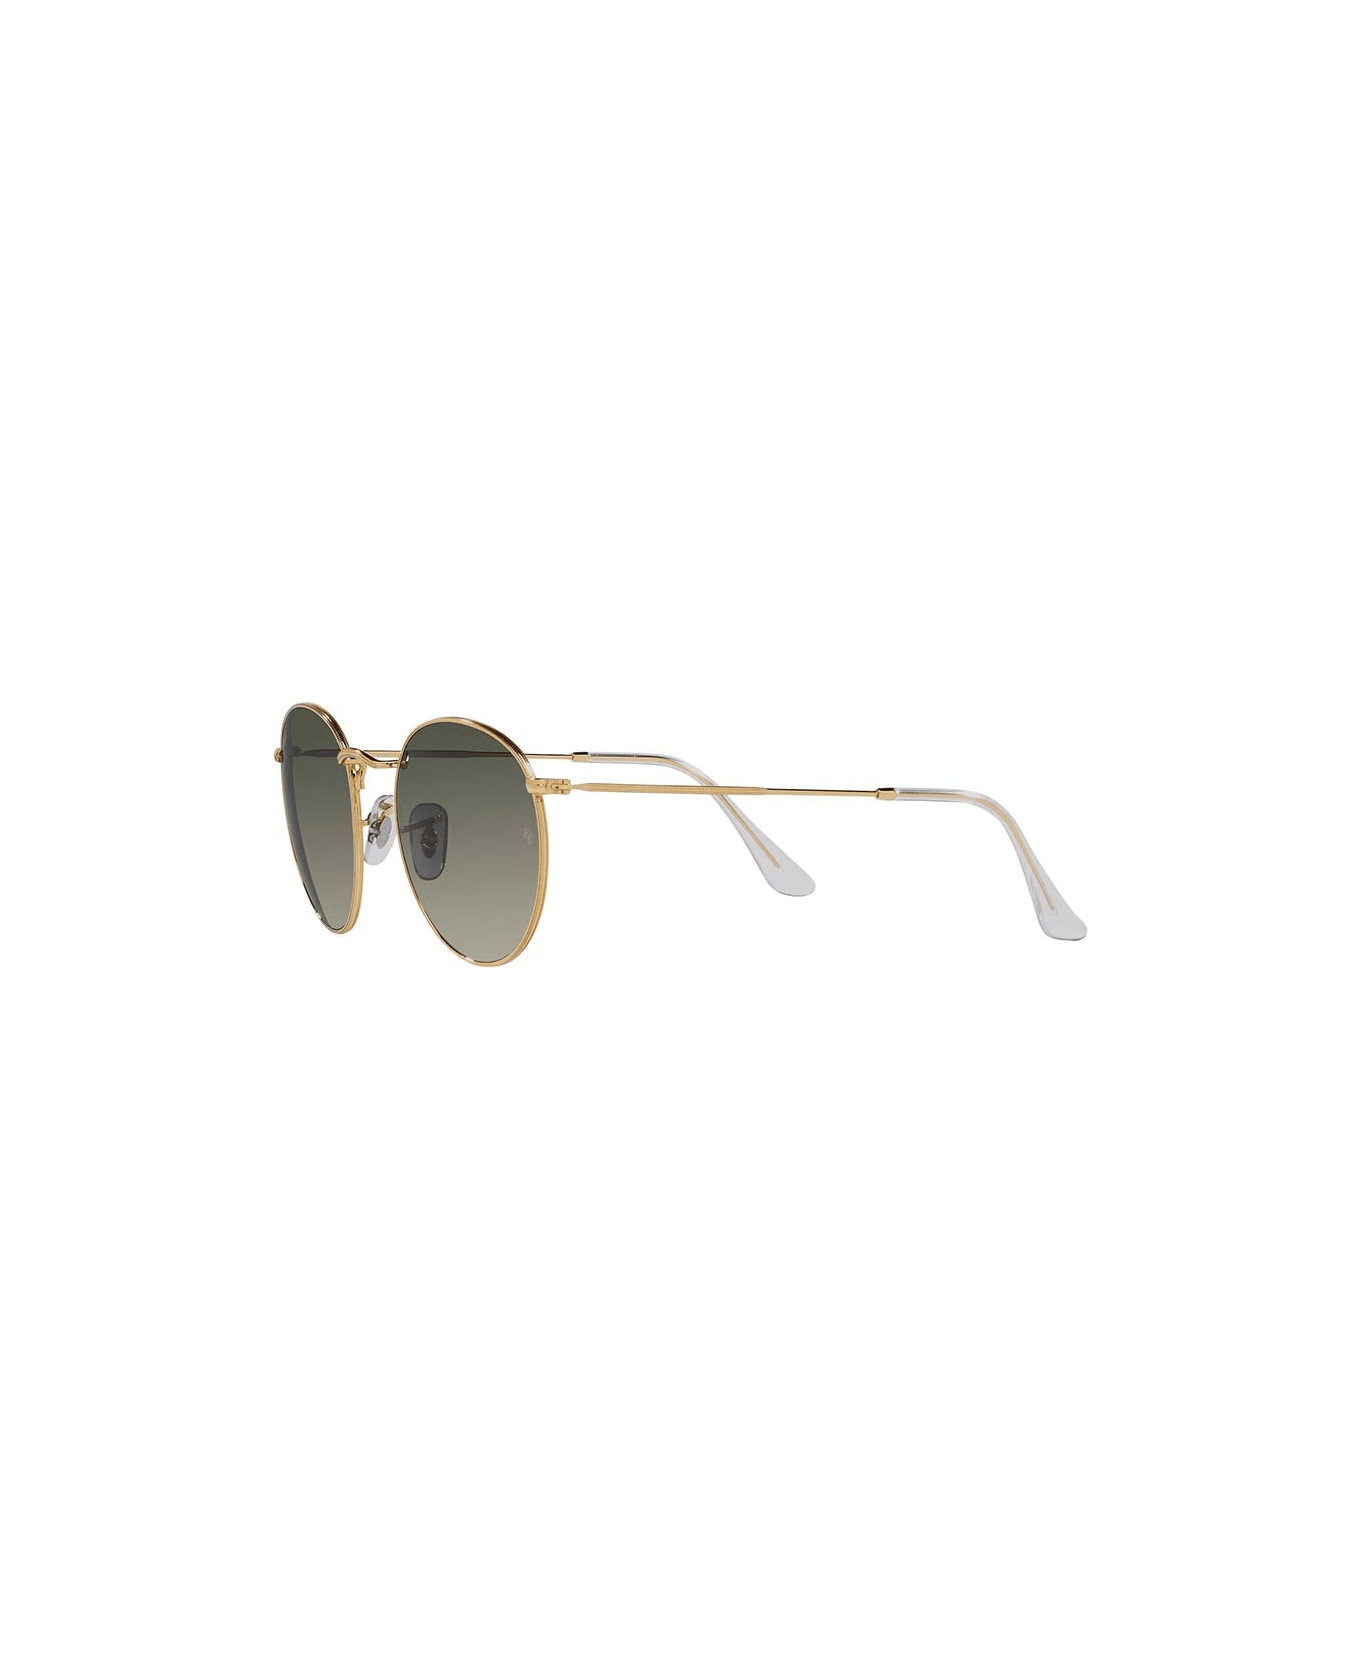 Ray-Ban Sunglasses - Oro/Grigio サングラス